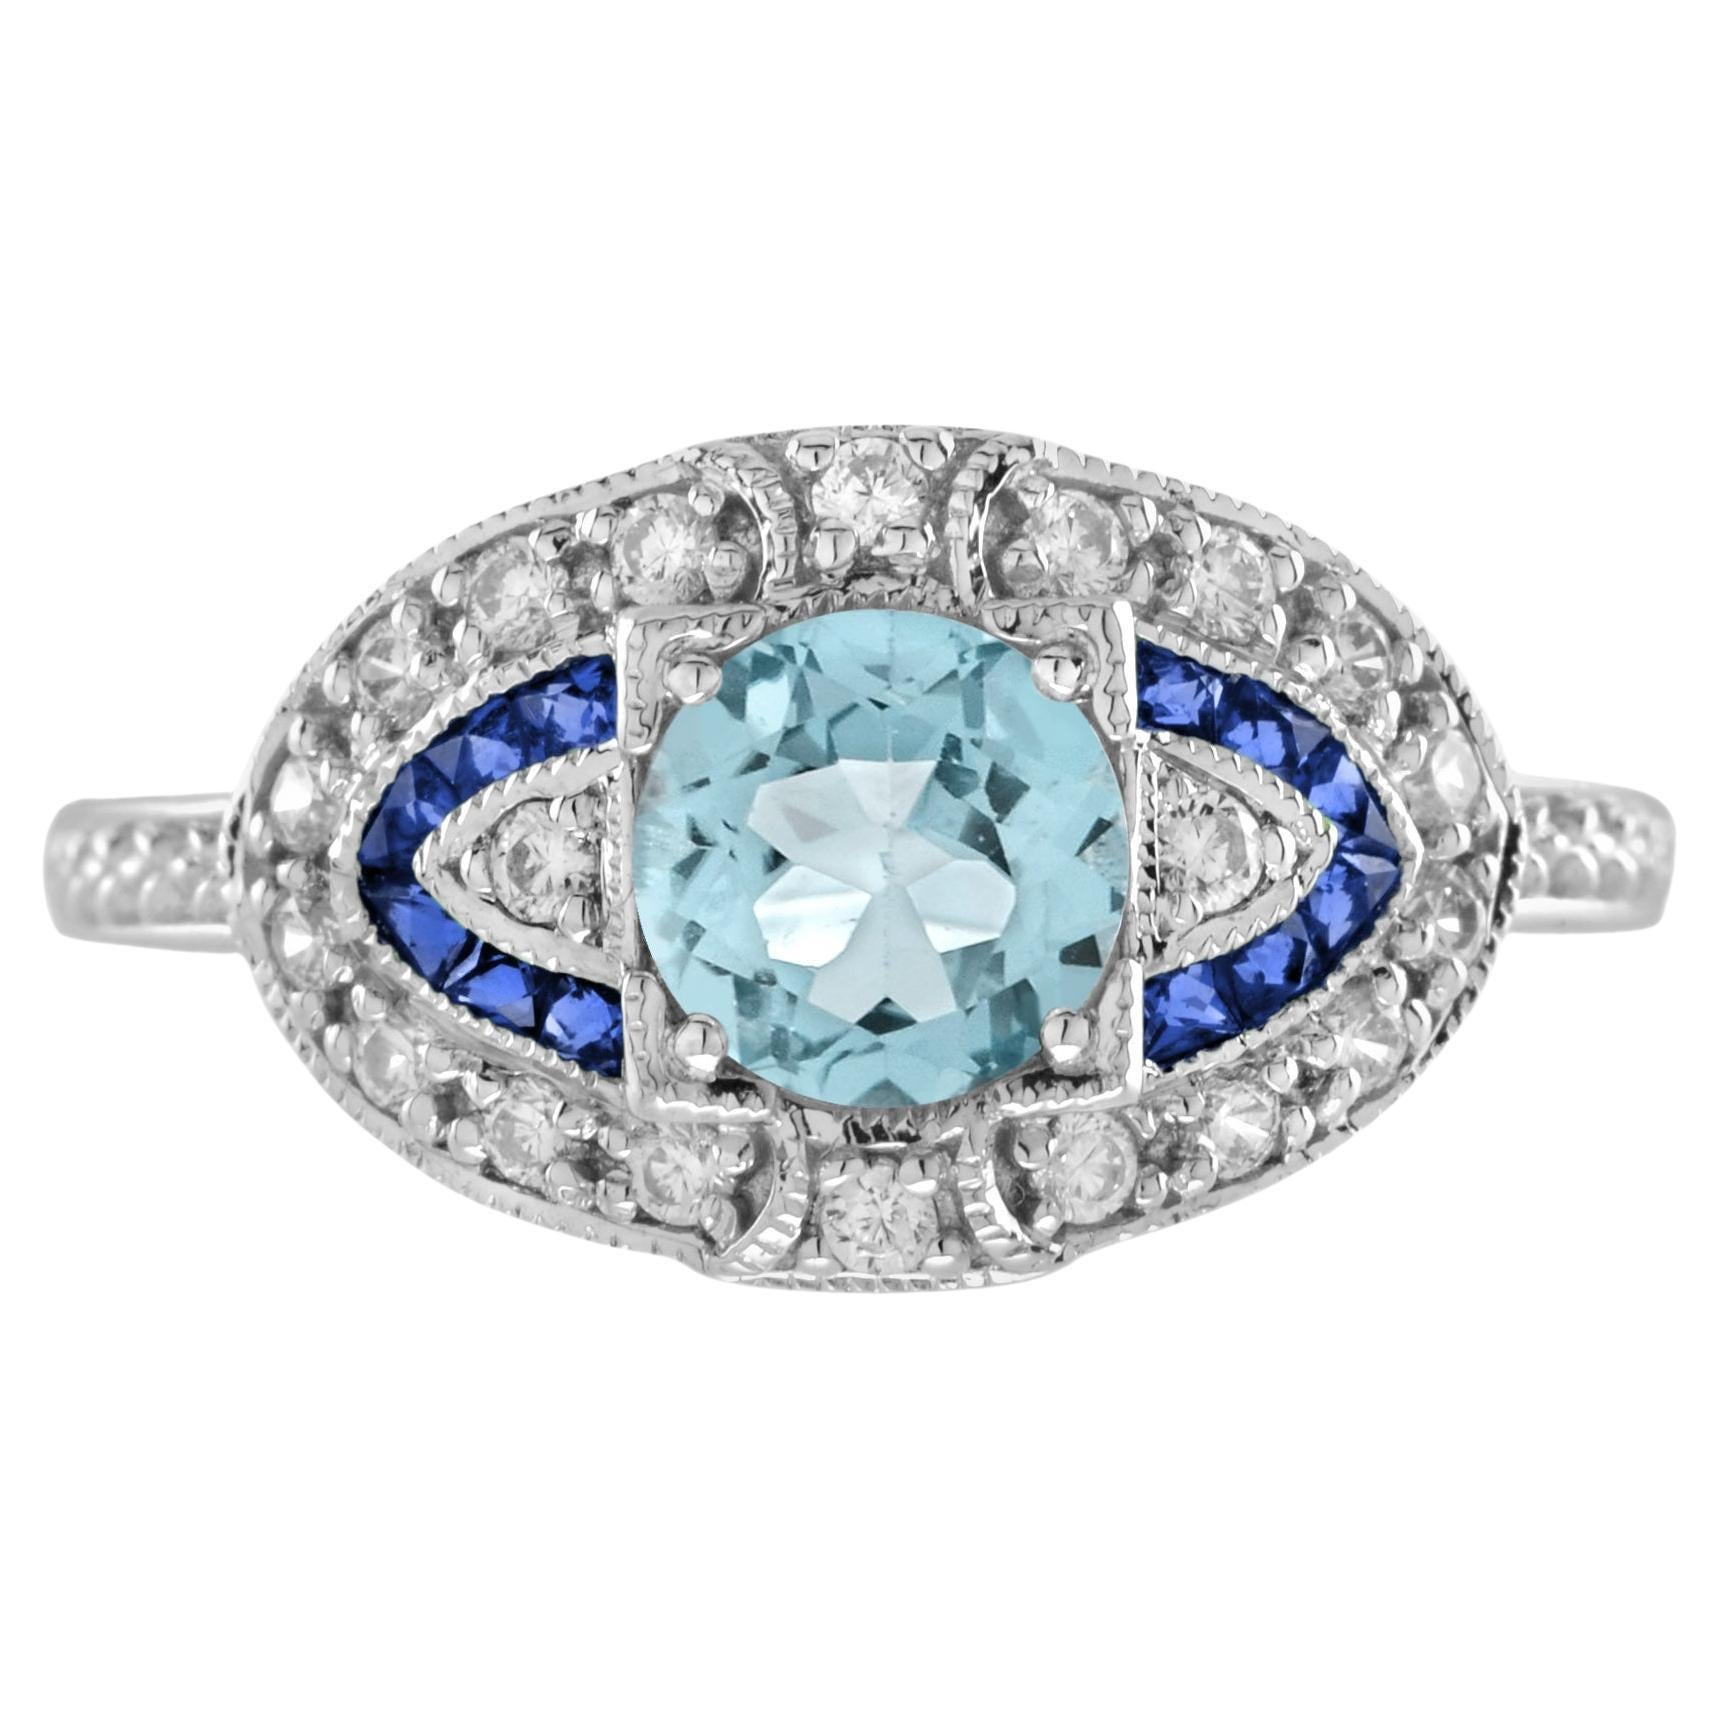 Aquamarine Sapphire Diamond Art Deco Style Engagement Ring in 18k White Gold